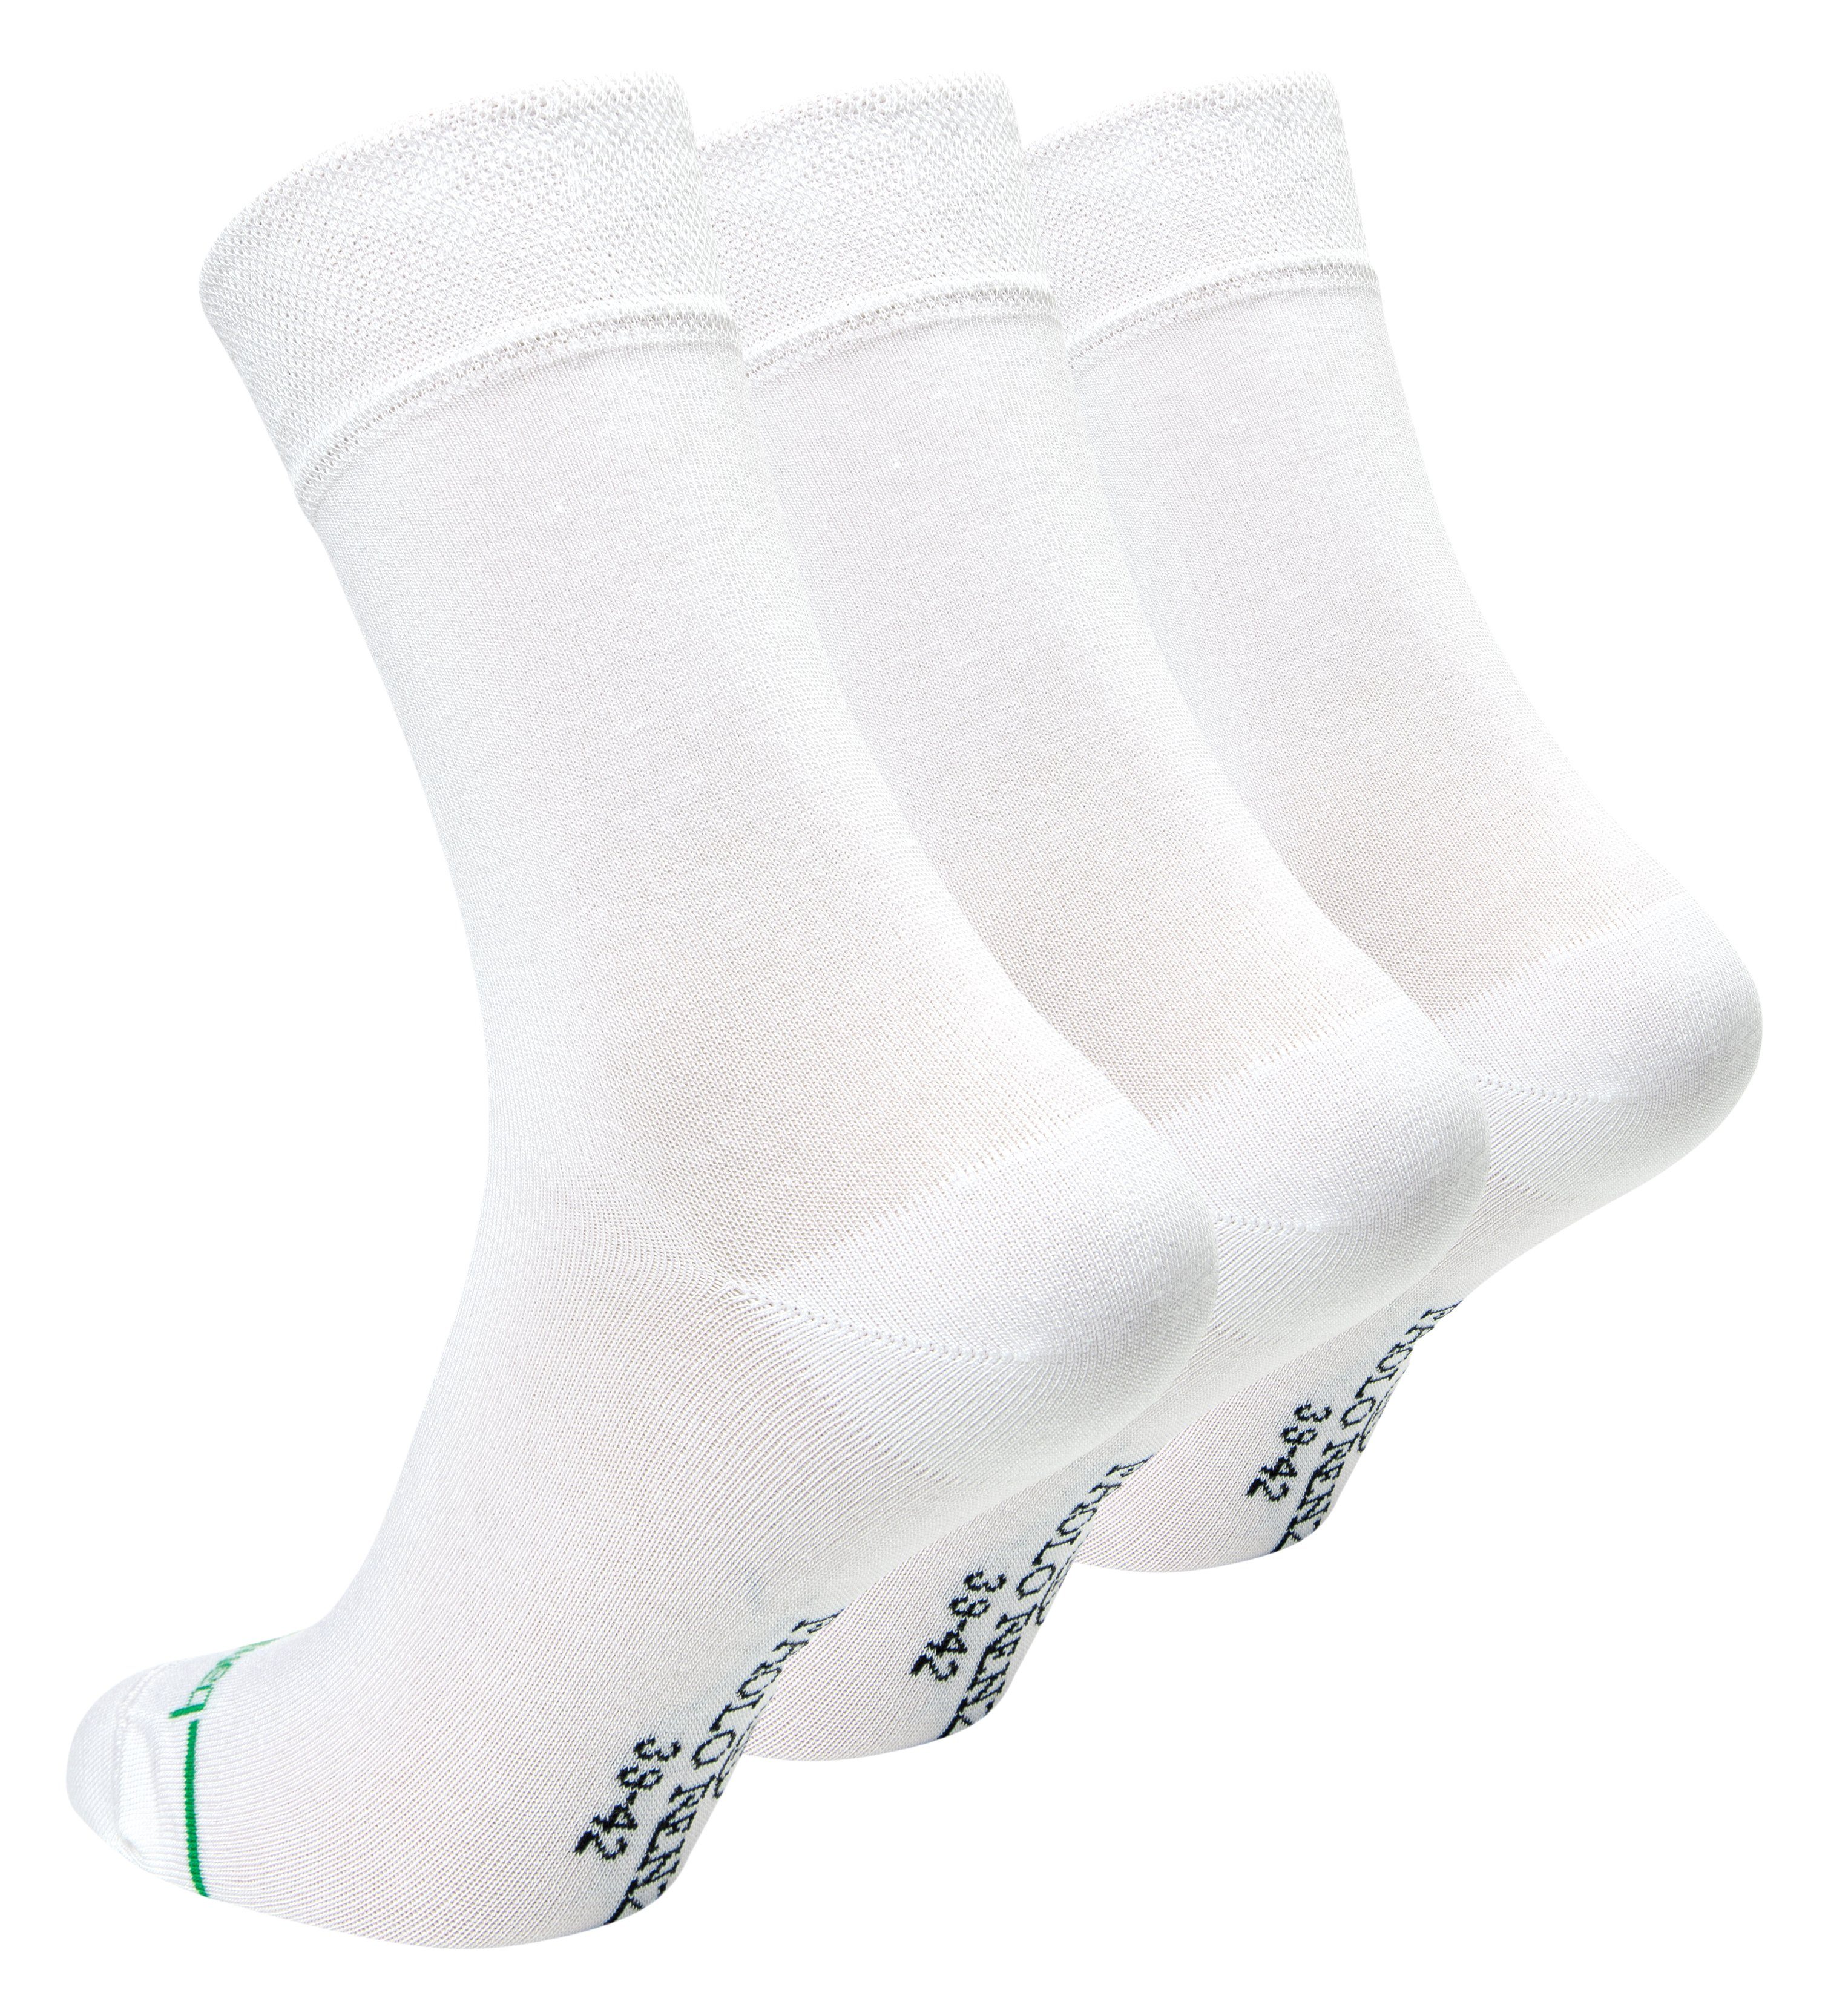 Paolo Renzo Gesundheitssocken aus hochwertiger Bambus Viskose (3-Paar) Atmungsaktive Herren Business Socken / Casual Socken - Geruchshemmend Weiß